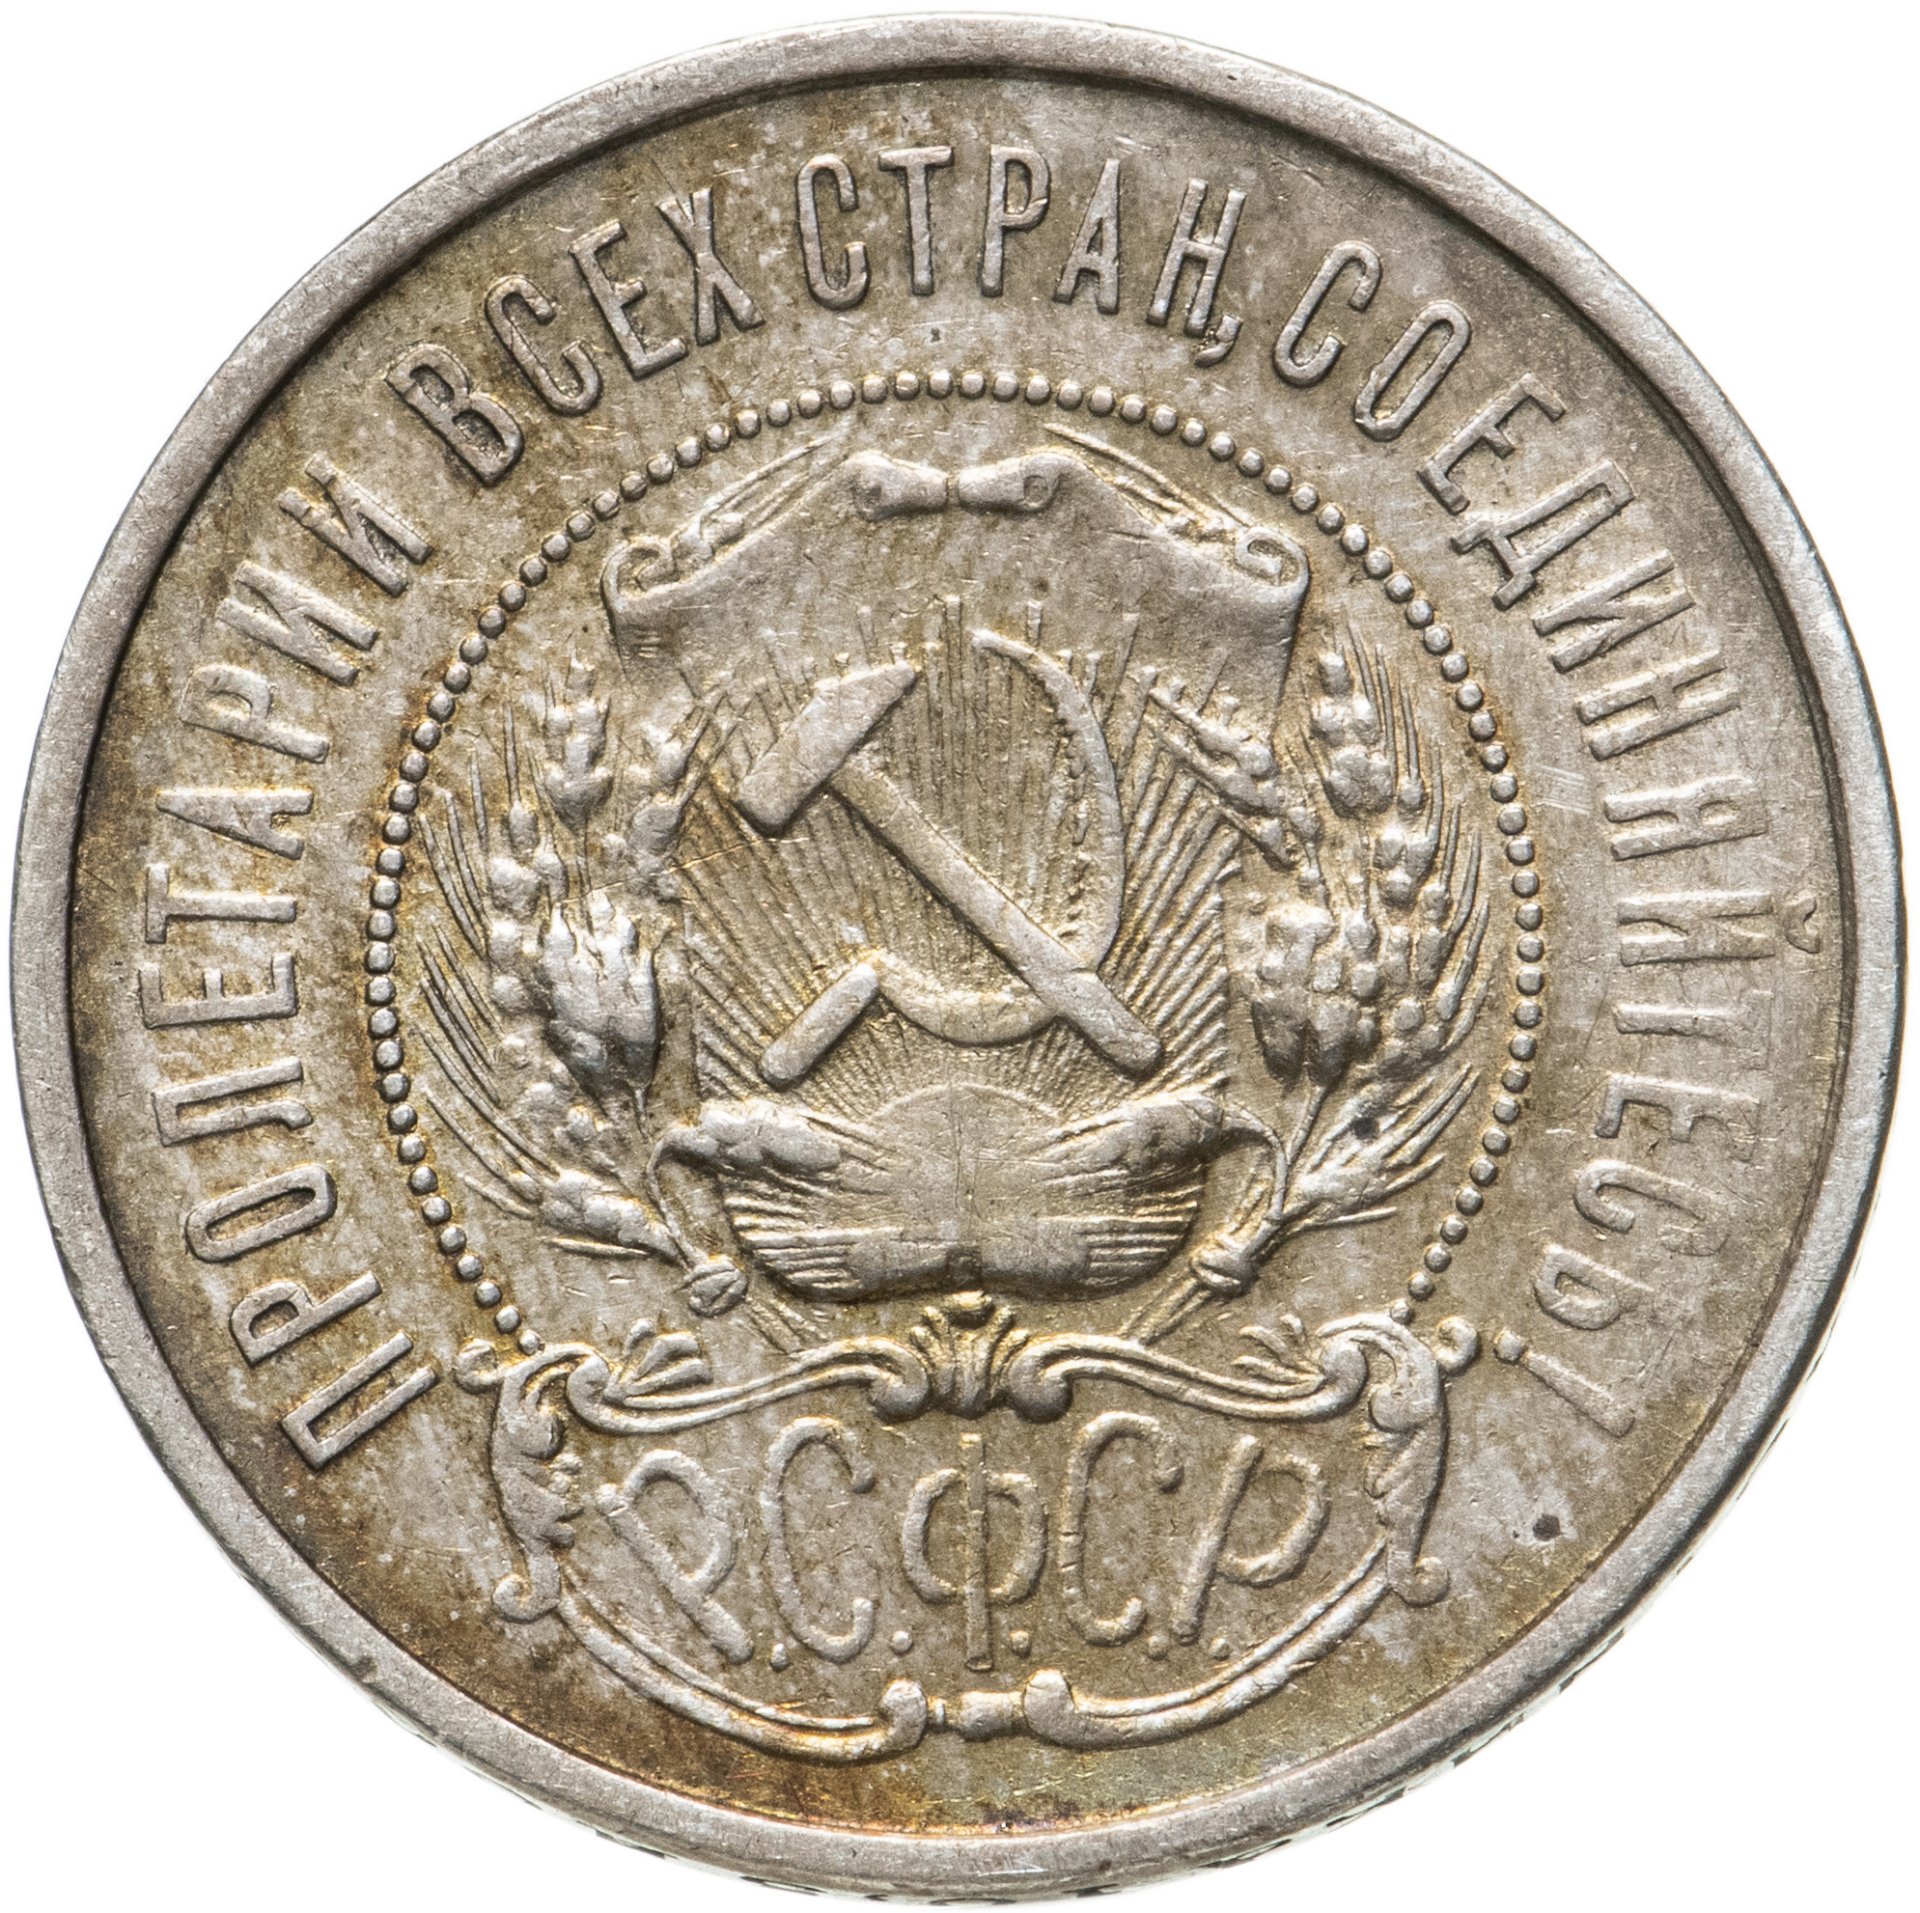 50 копеек 1922 года серебро. 50 Копеек 1922. 50 Копеек 1922 года полированный чекан. Монеты 1921 года. Монеты 1922 года выпуска.